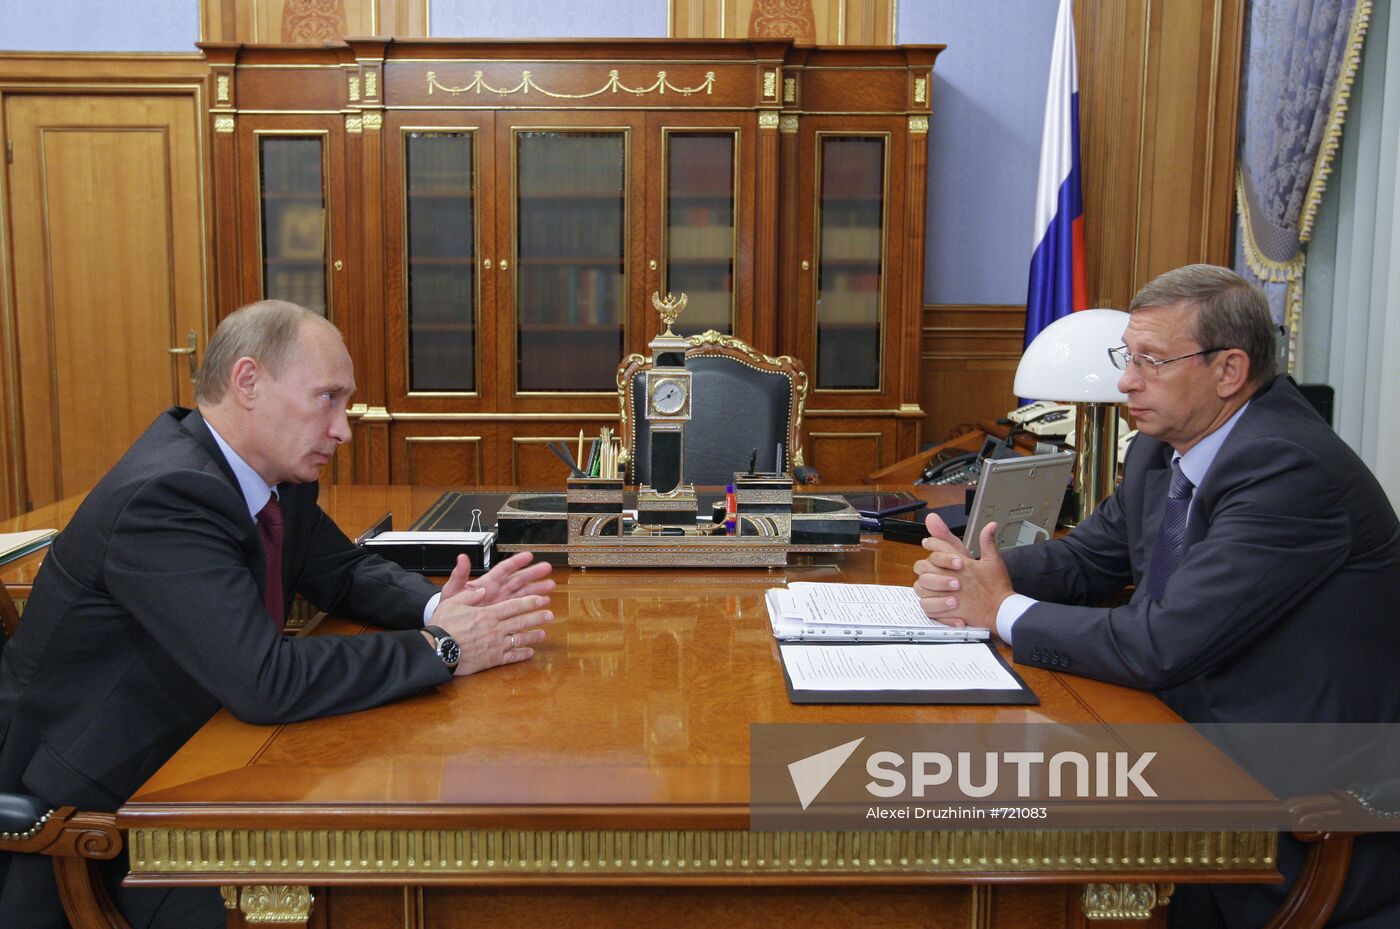 Vladimir Putin meets with Vladimir Yevtushenkov